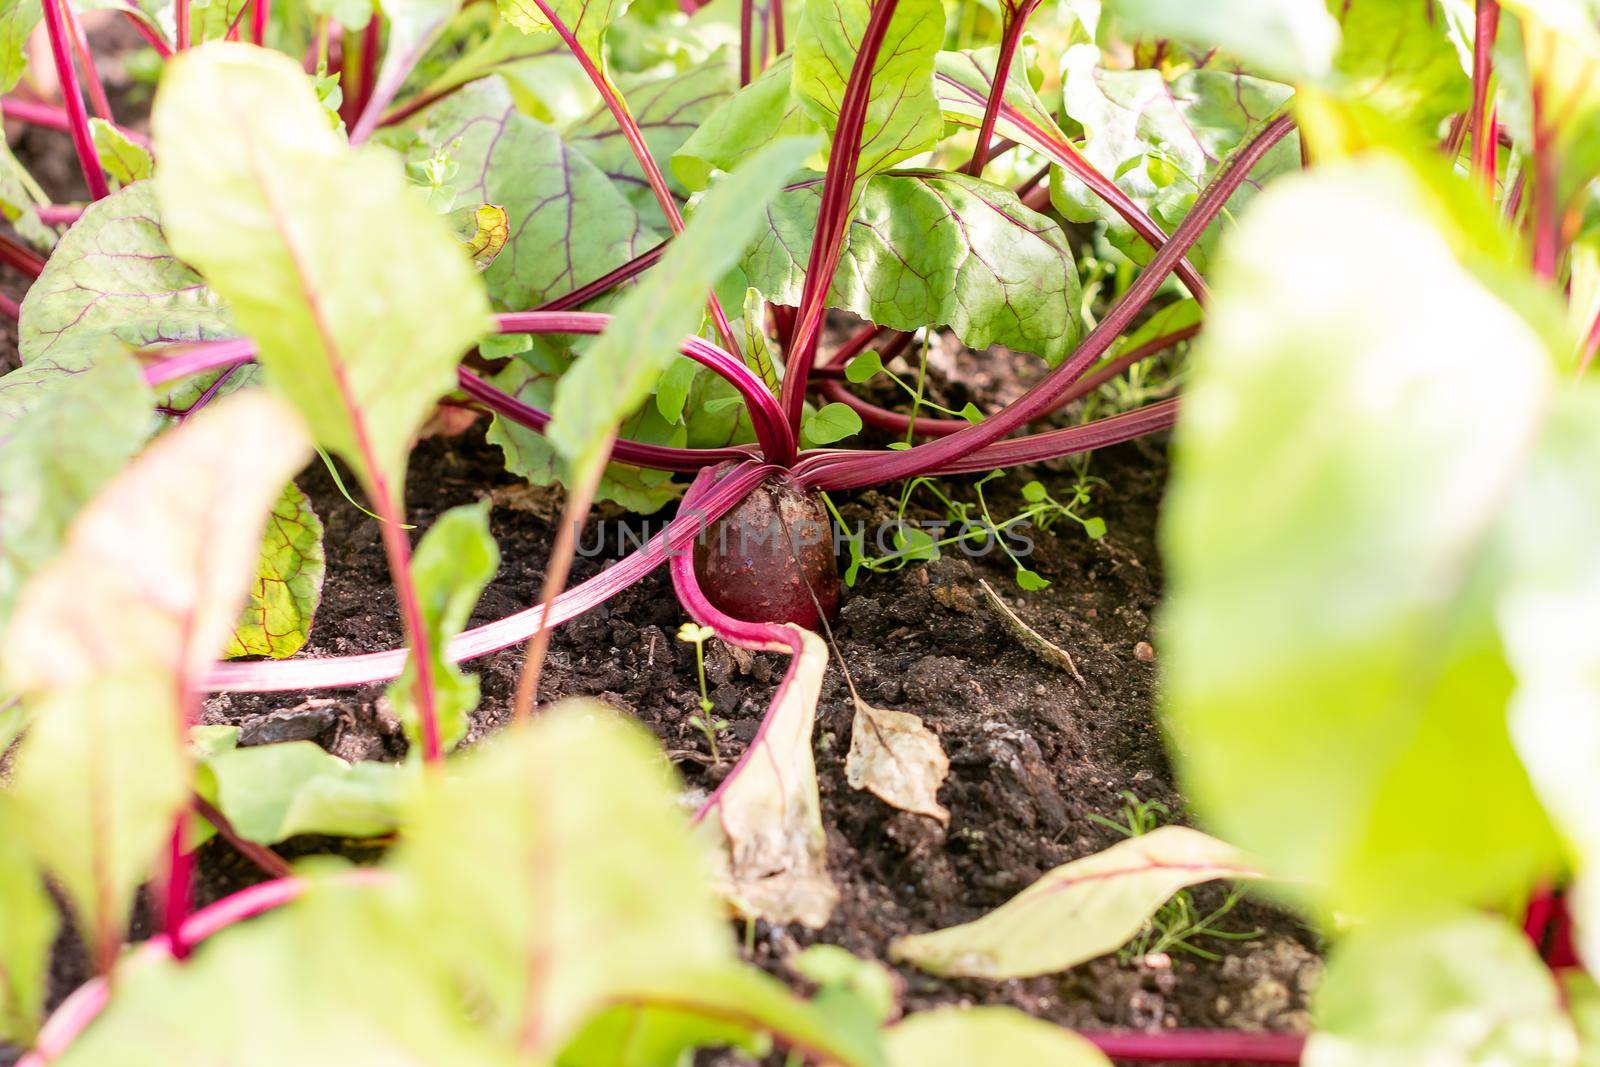 Red beetroot planted in summer garden. Growing organic beet vegetables